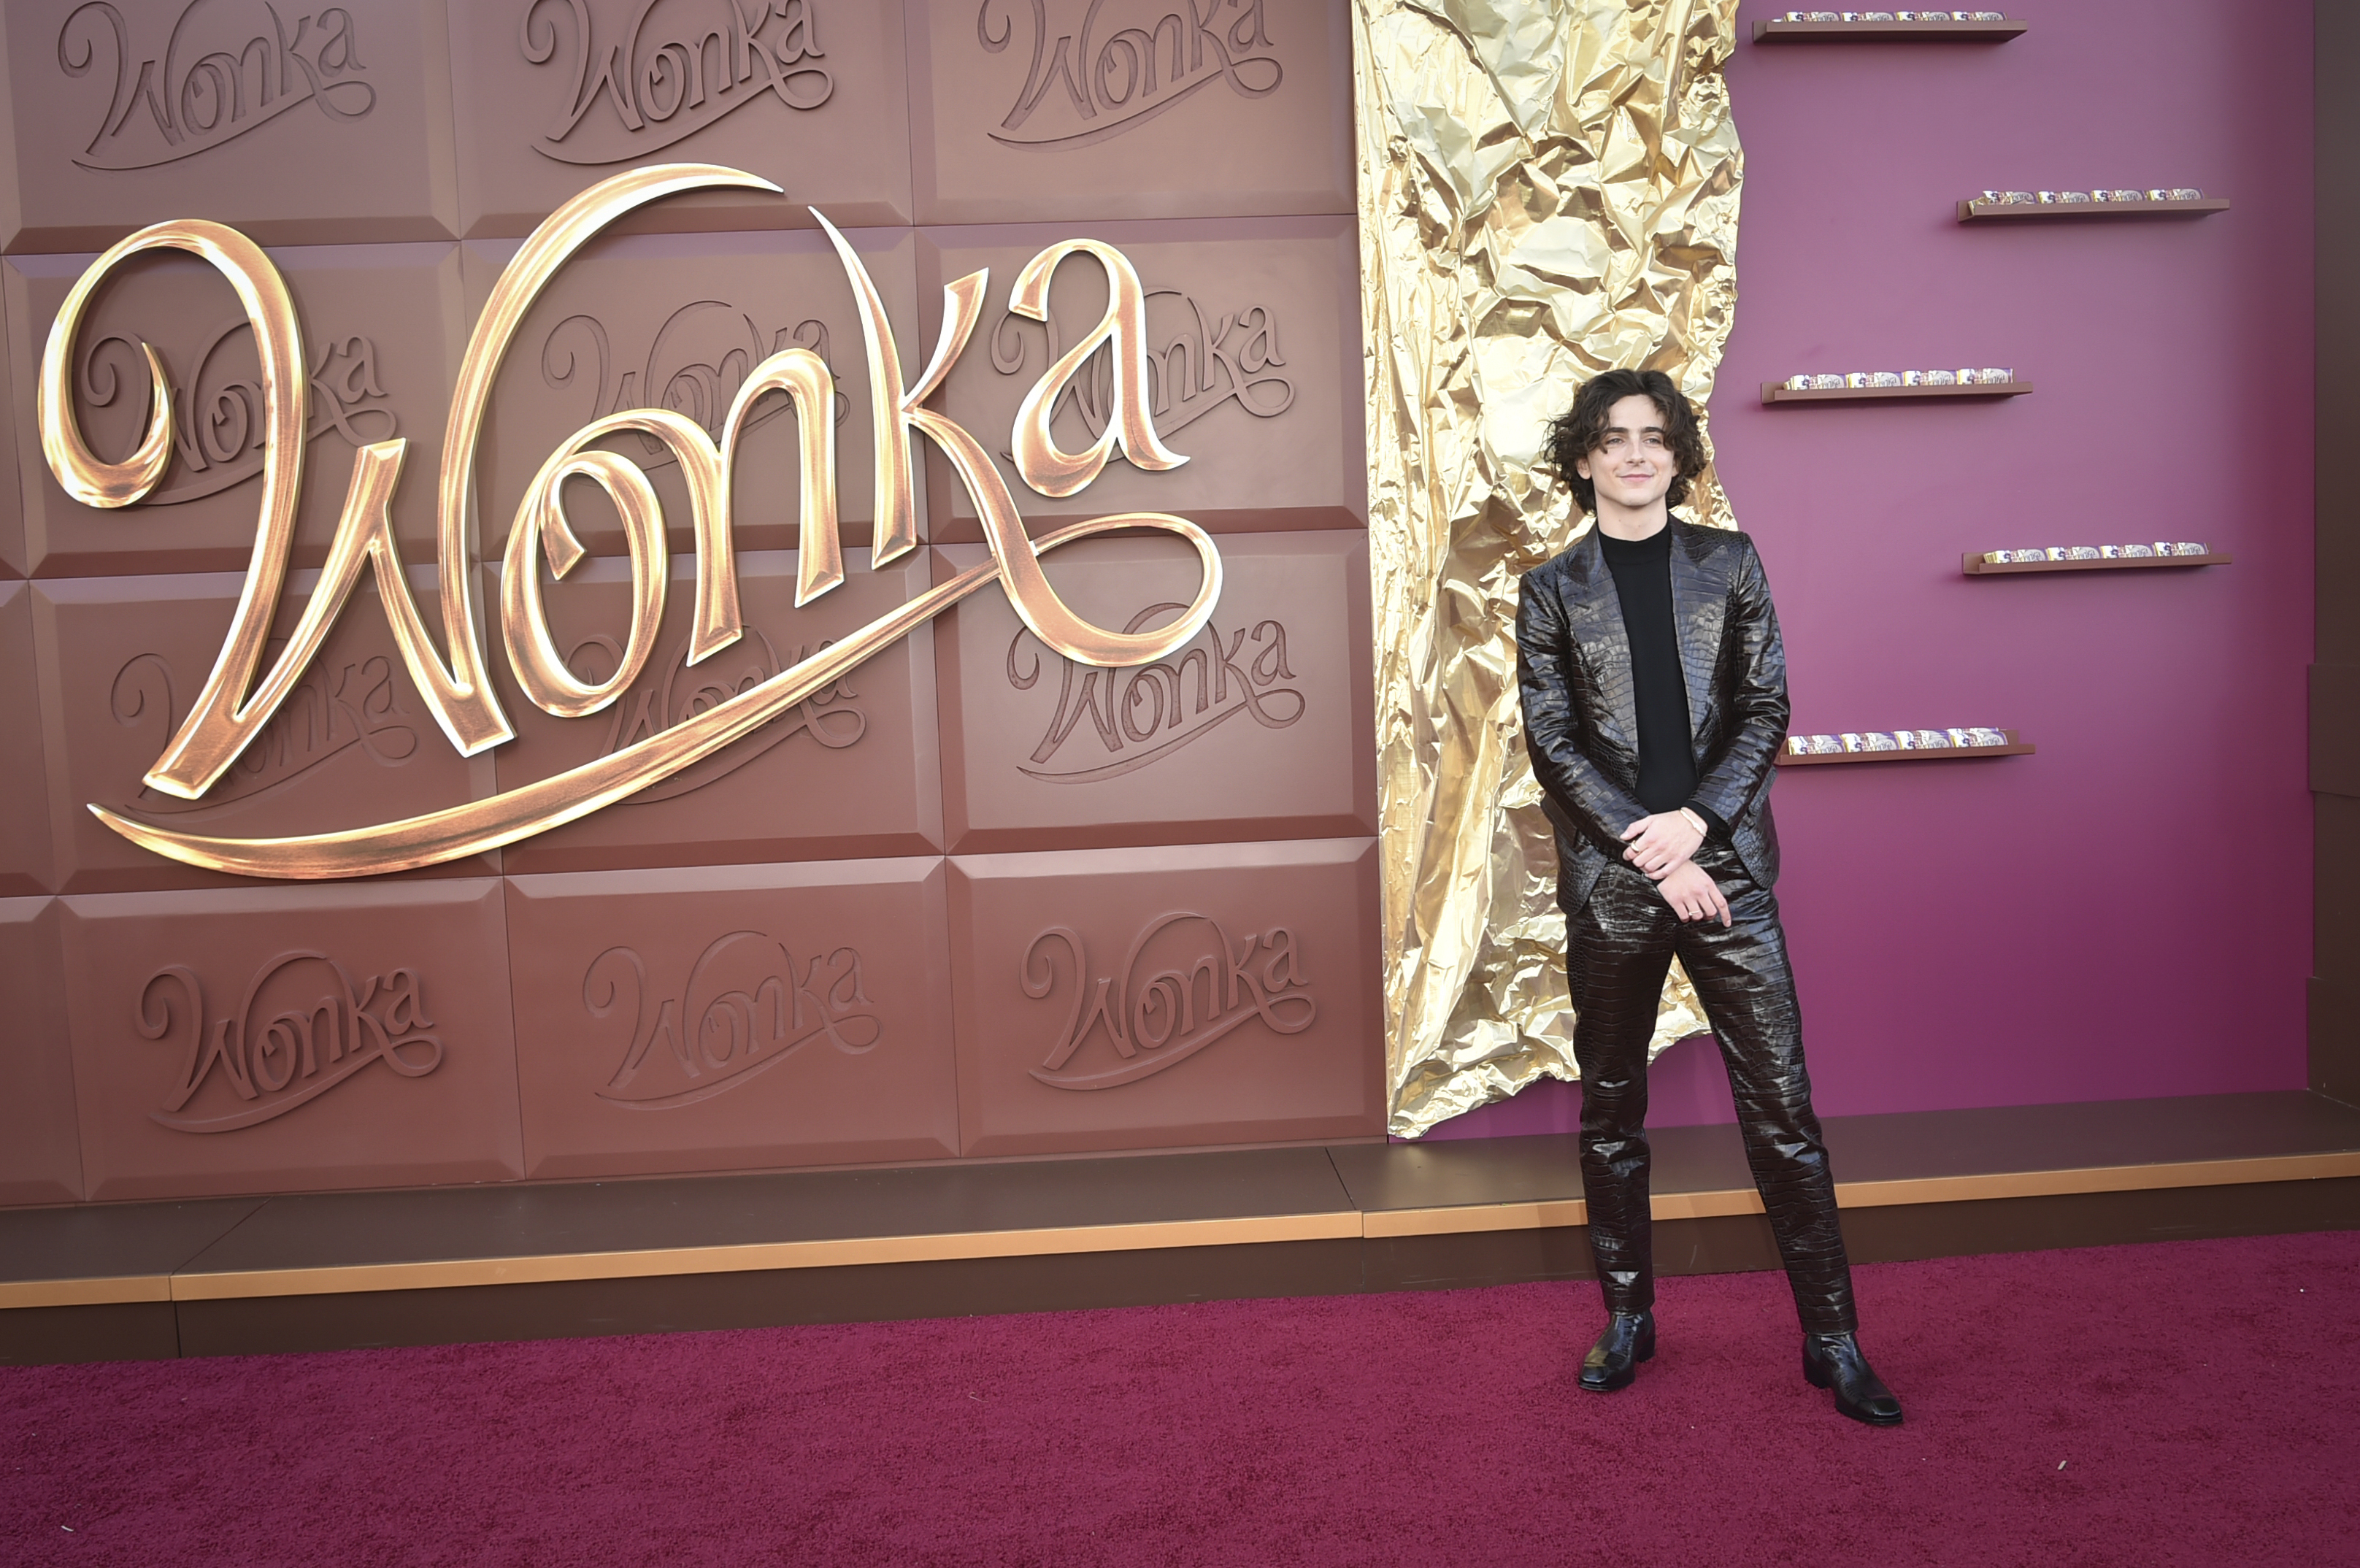 Wonka box office: How much has it made? - Dexerto